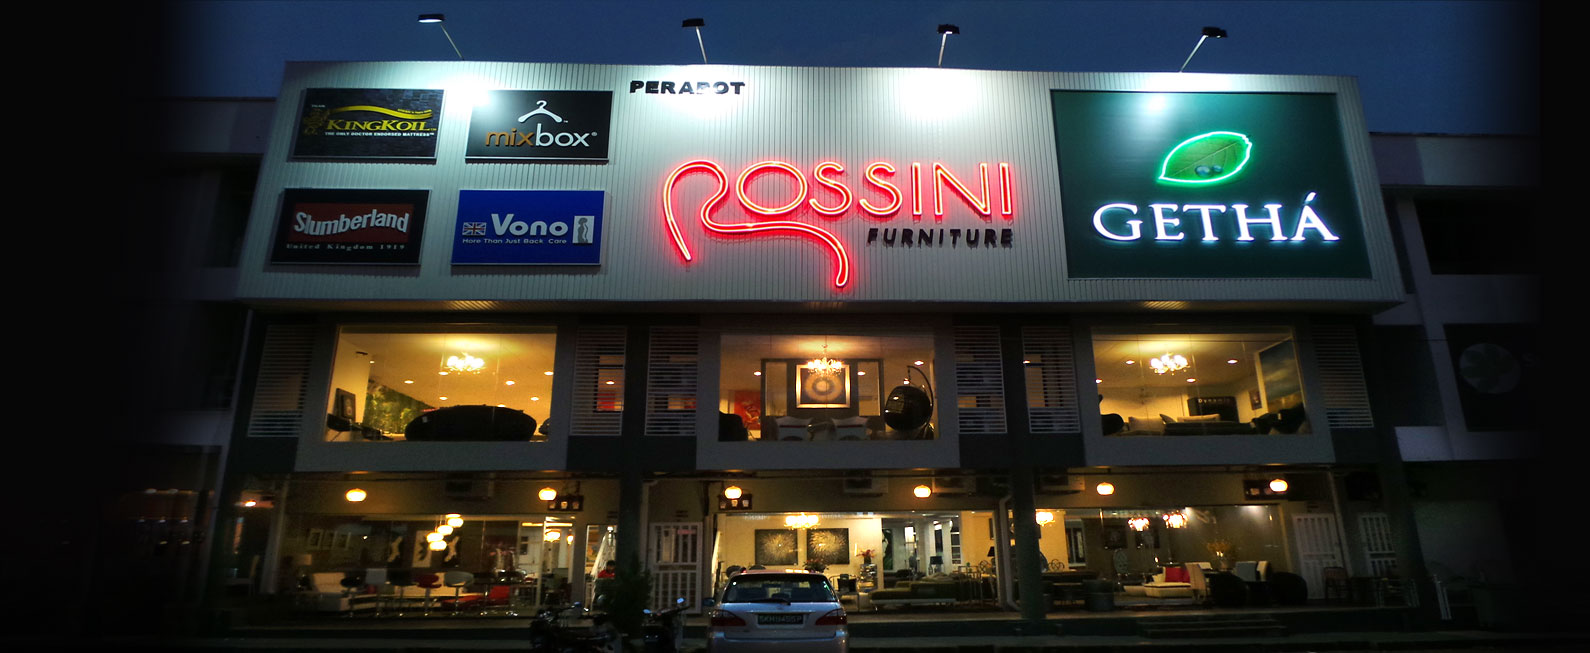 About Rossini Furniture 02